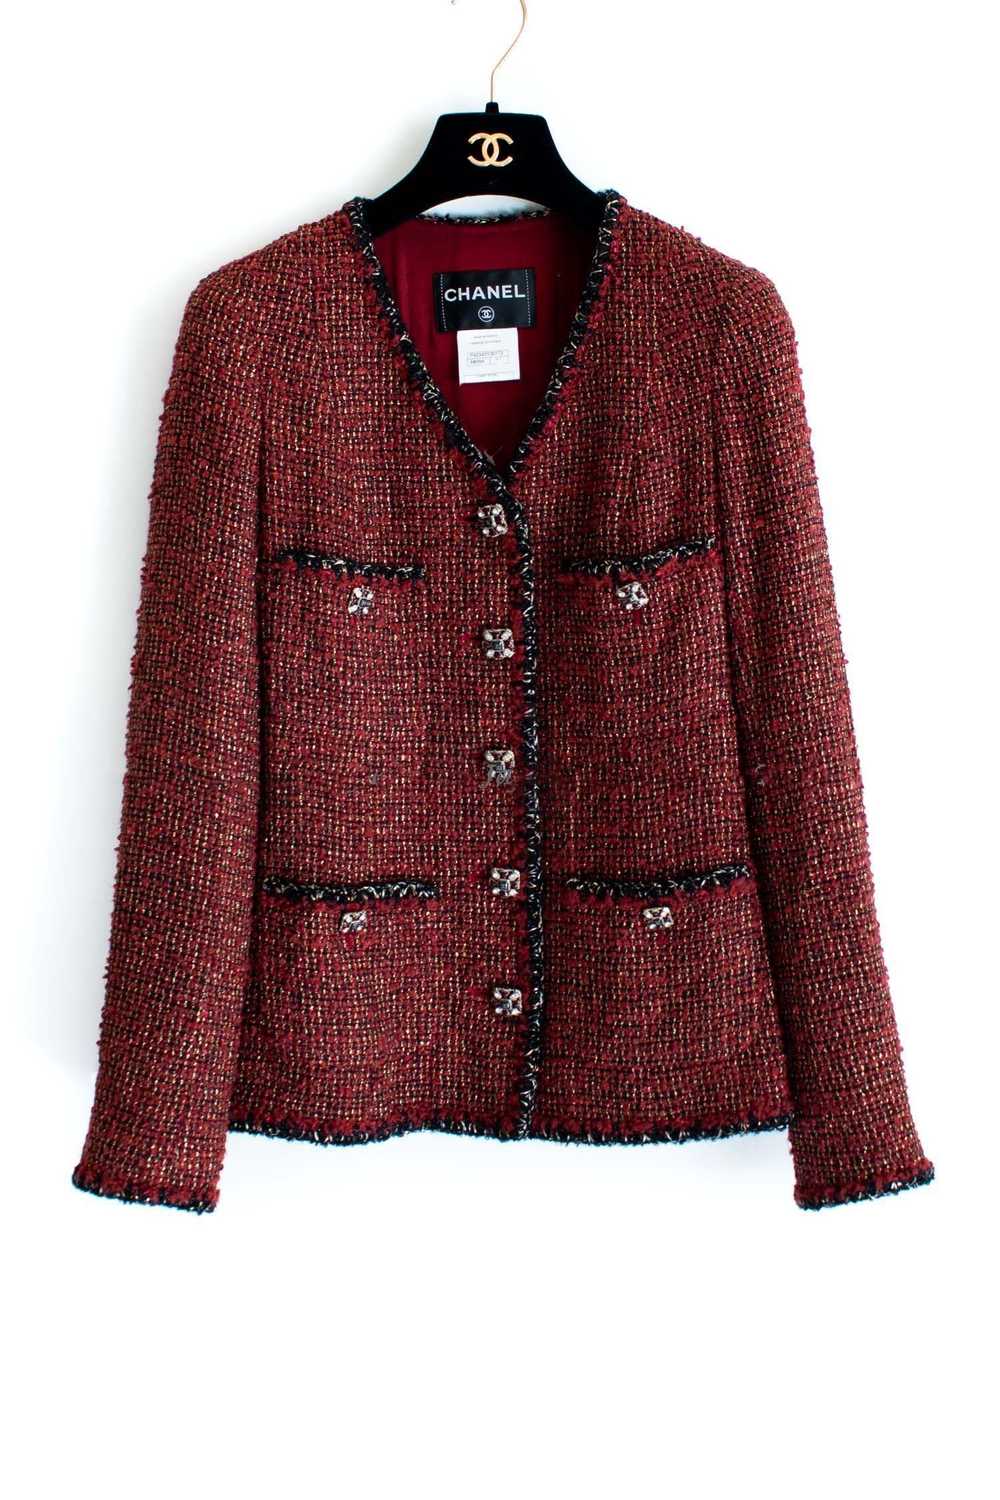 Product Details Chanel Red Lesage Tweed Jacket - image 2